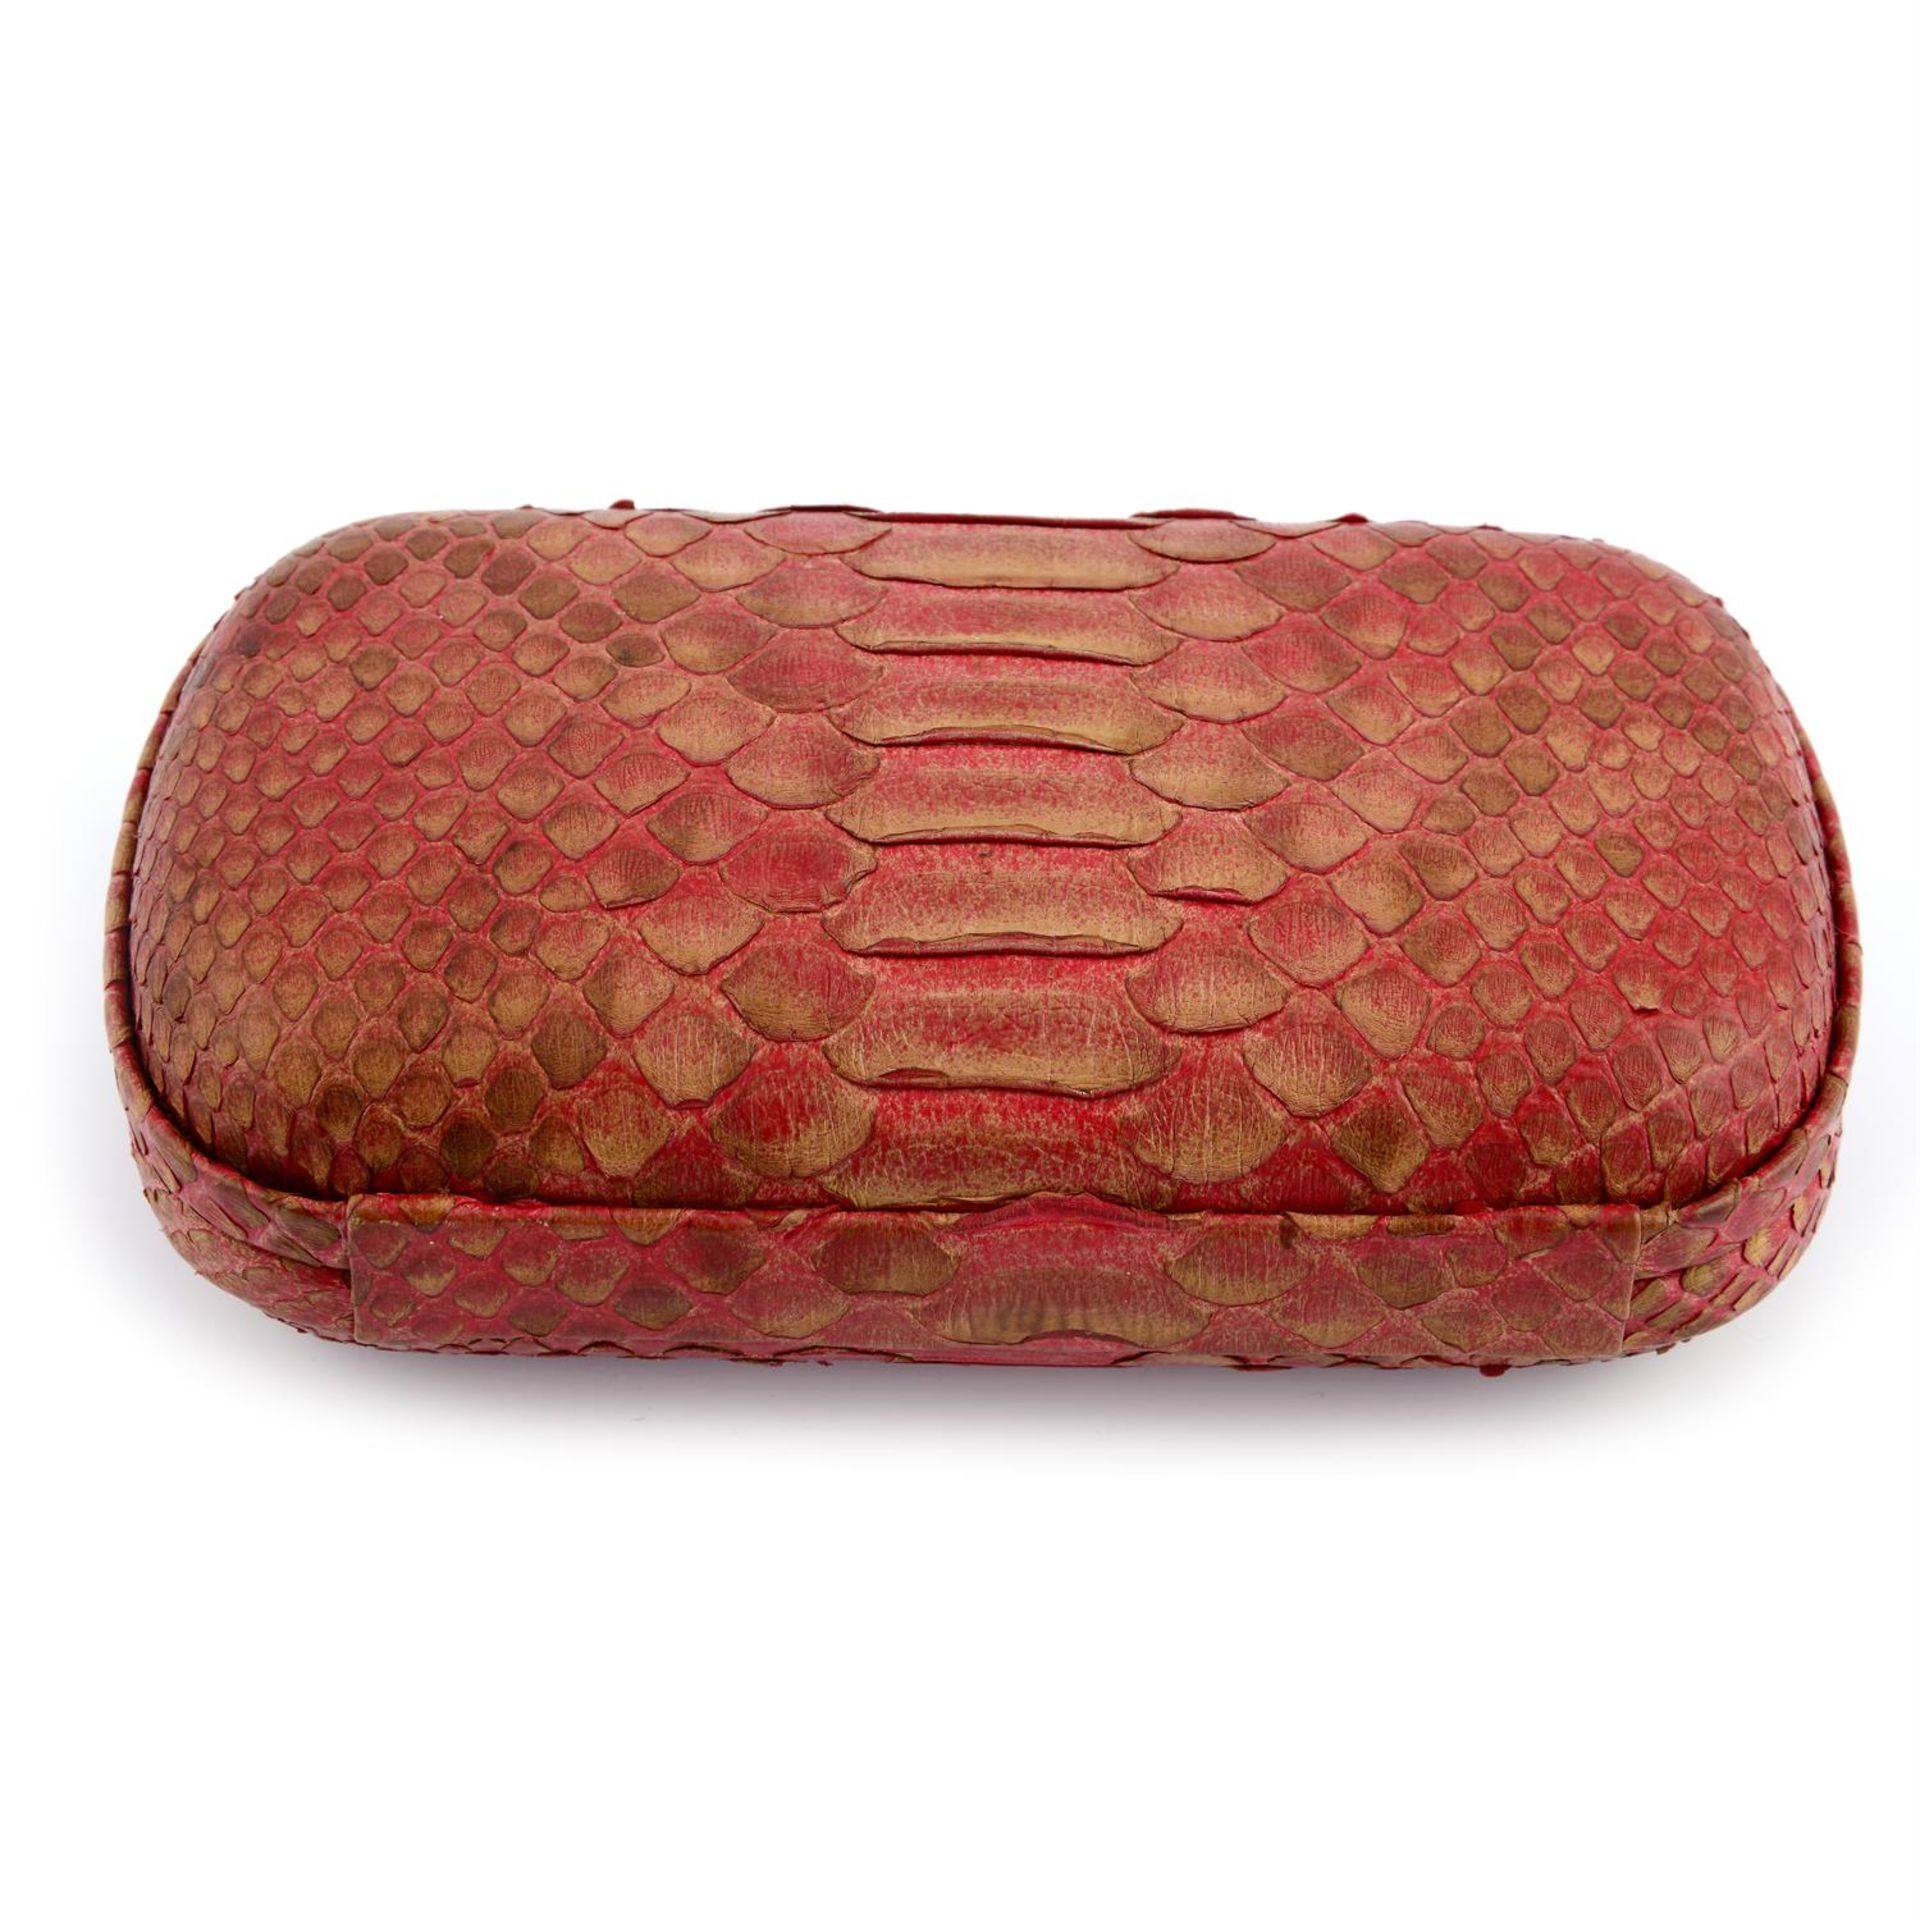 BOTTEGA VENETA - a pink snakeskin box clutch bag. - Image 2 of 3